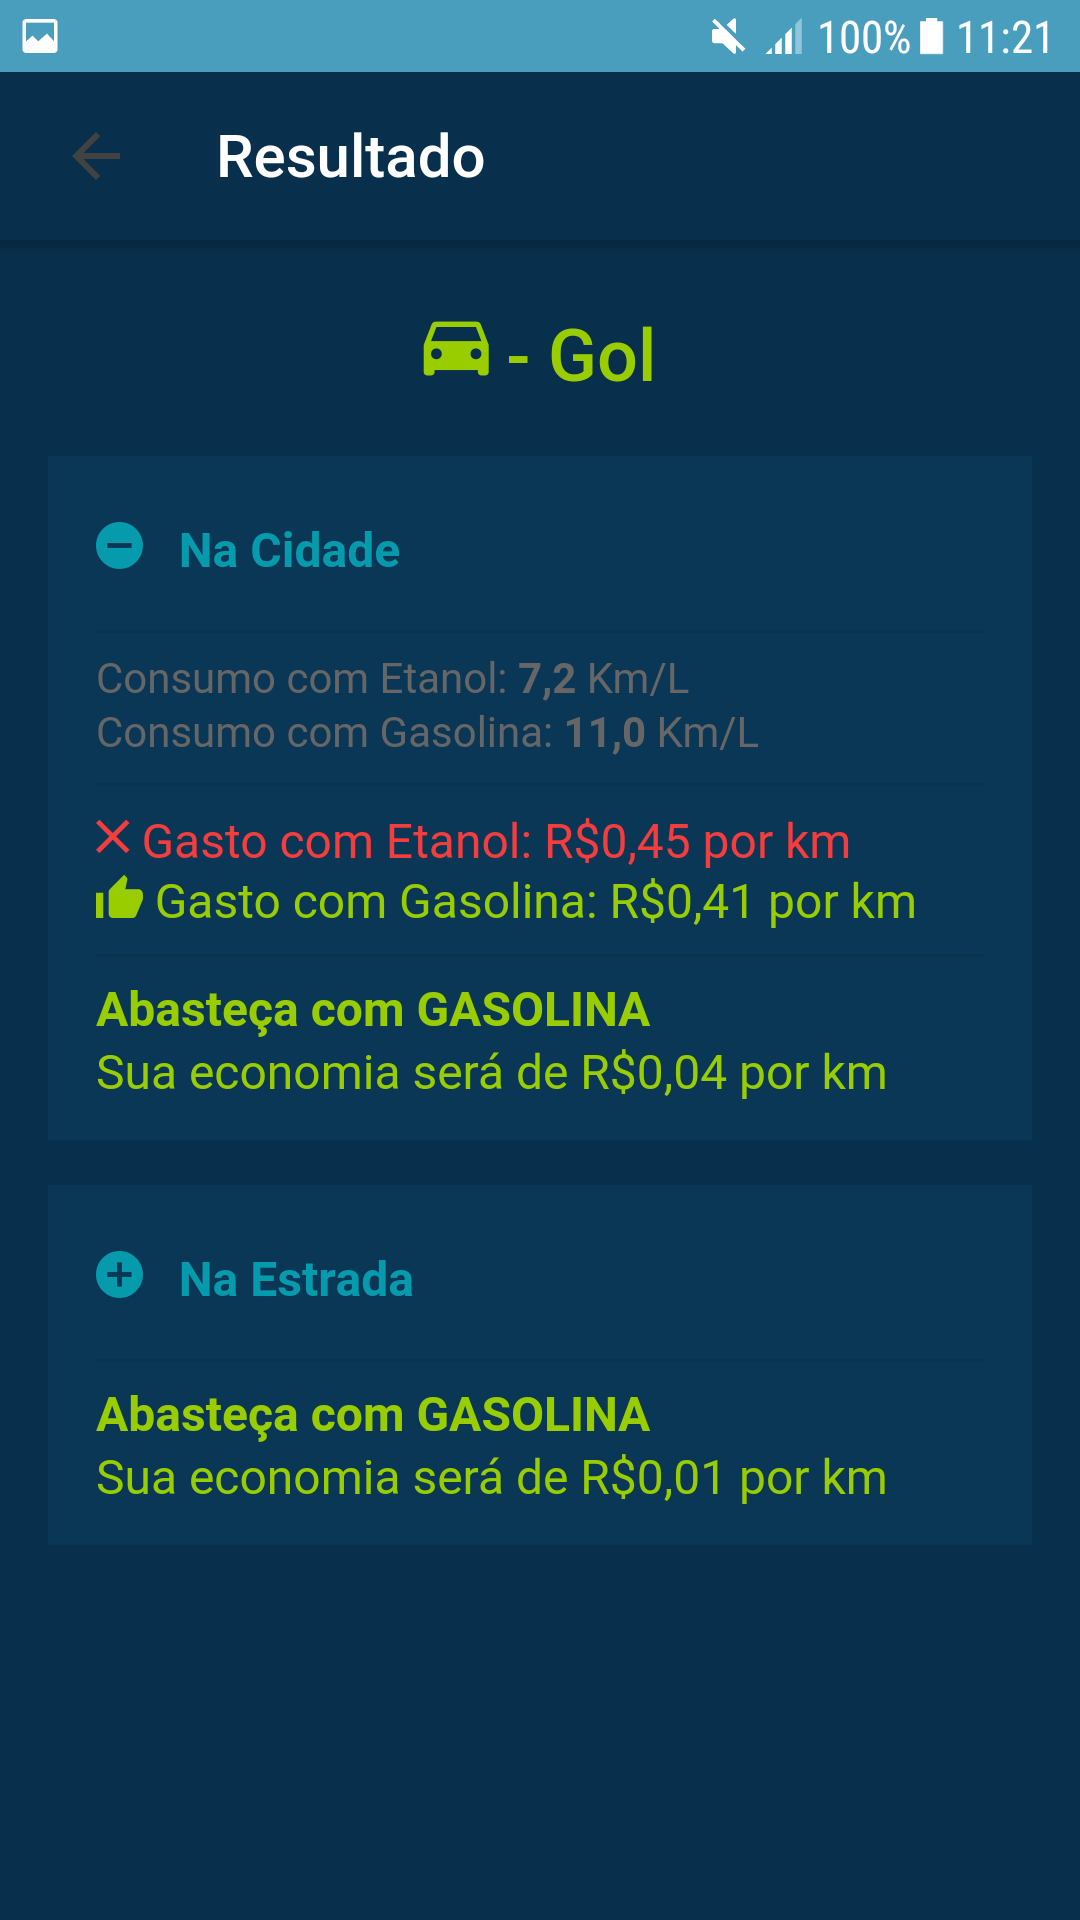 Android application Gasoleta - Gasolina ou Etanol? screenshort